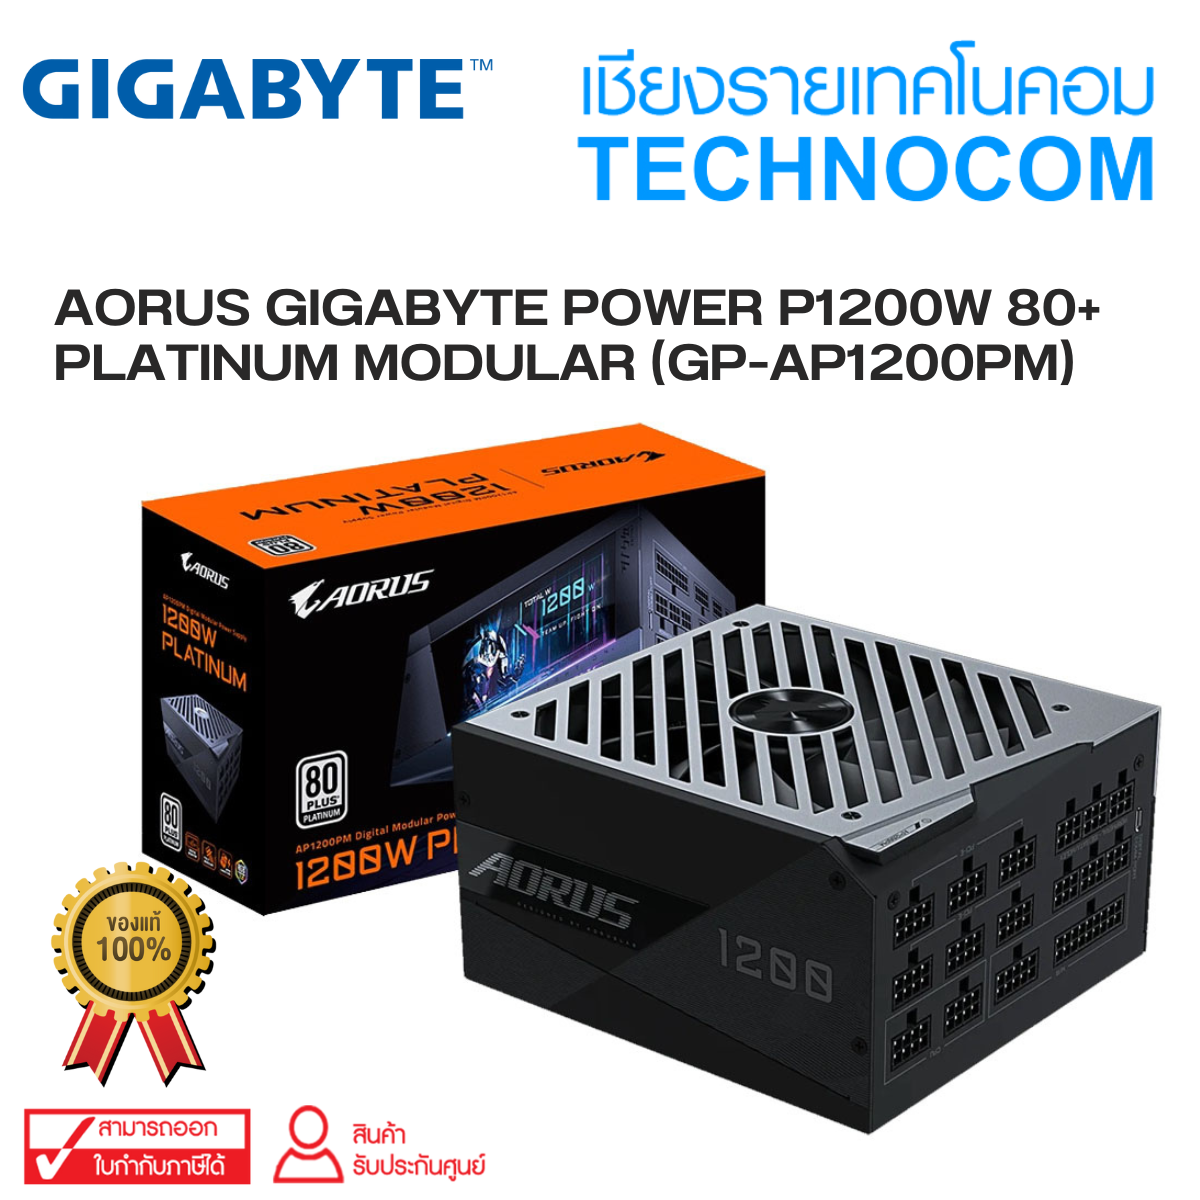 AORUS GIGABYTE POWER P1200W 80+ PLATINUM MODULAR (GP-AP1200PM)